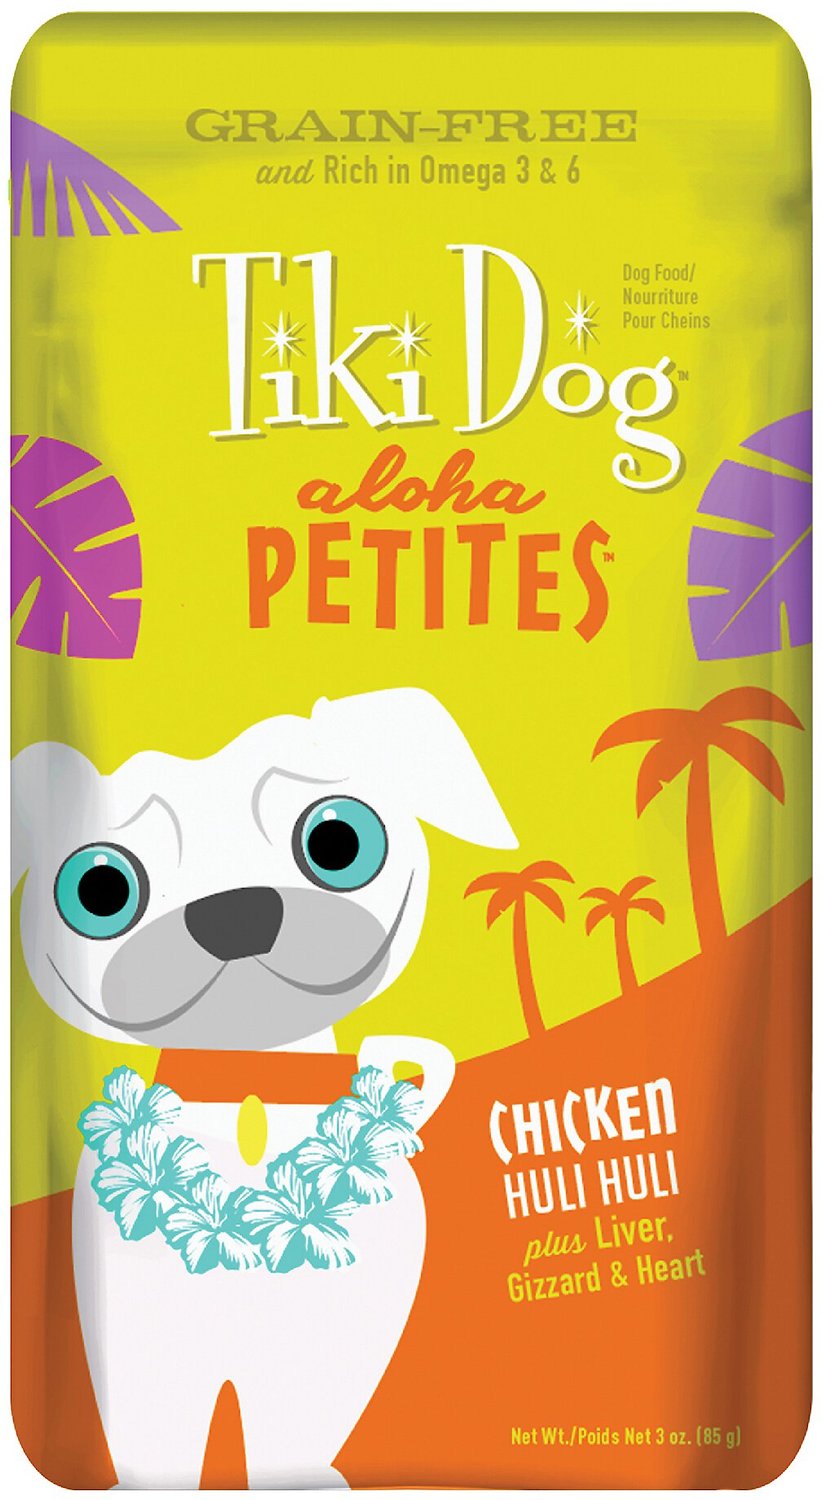 TIKI DOG Aloha Petites Chicken Huli Huli GrainFree Dog Food, 3.5oz